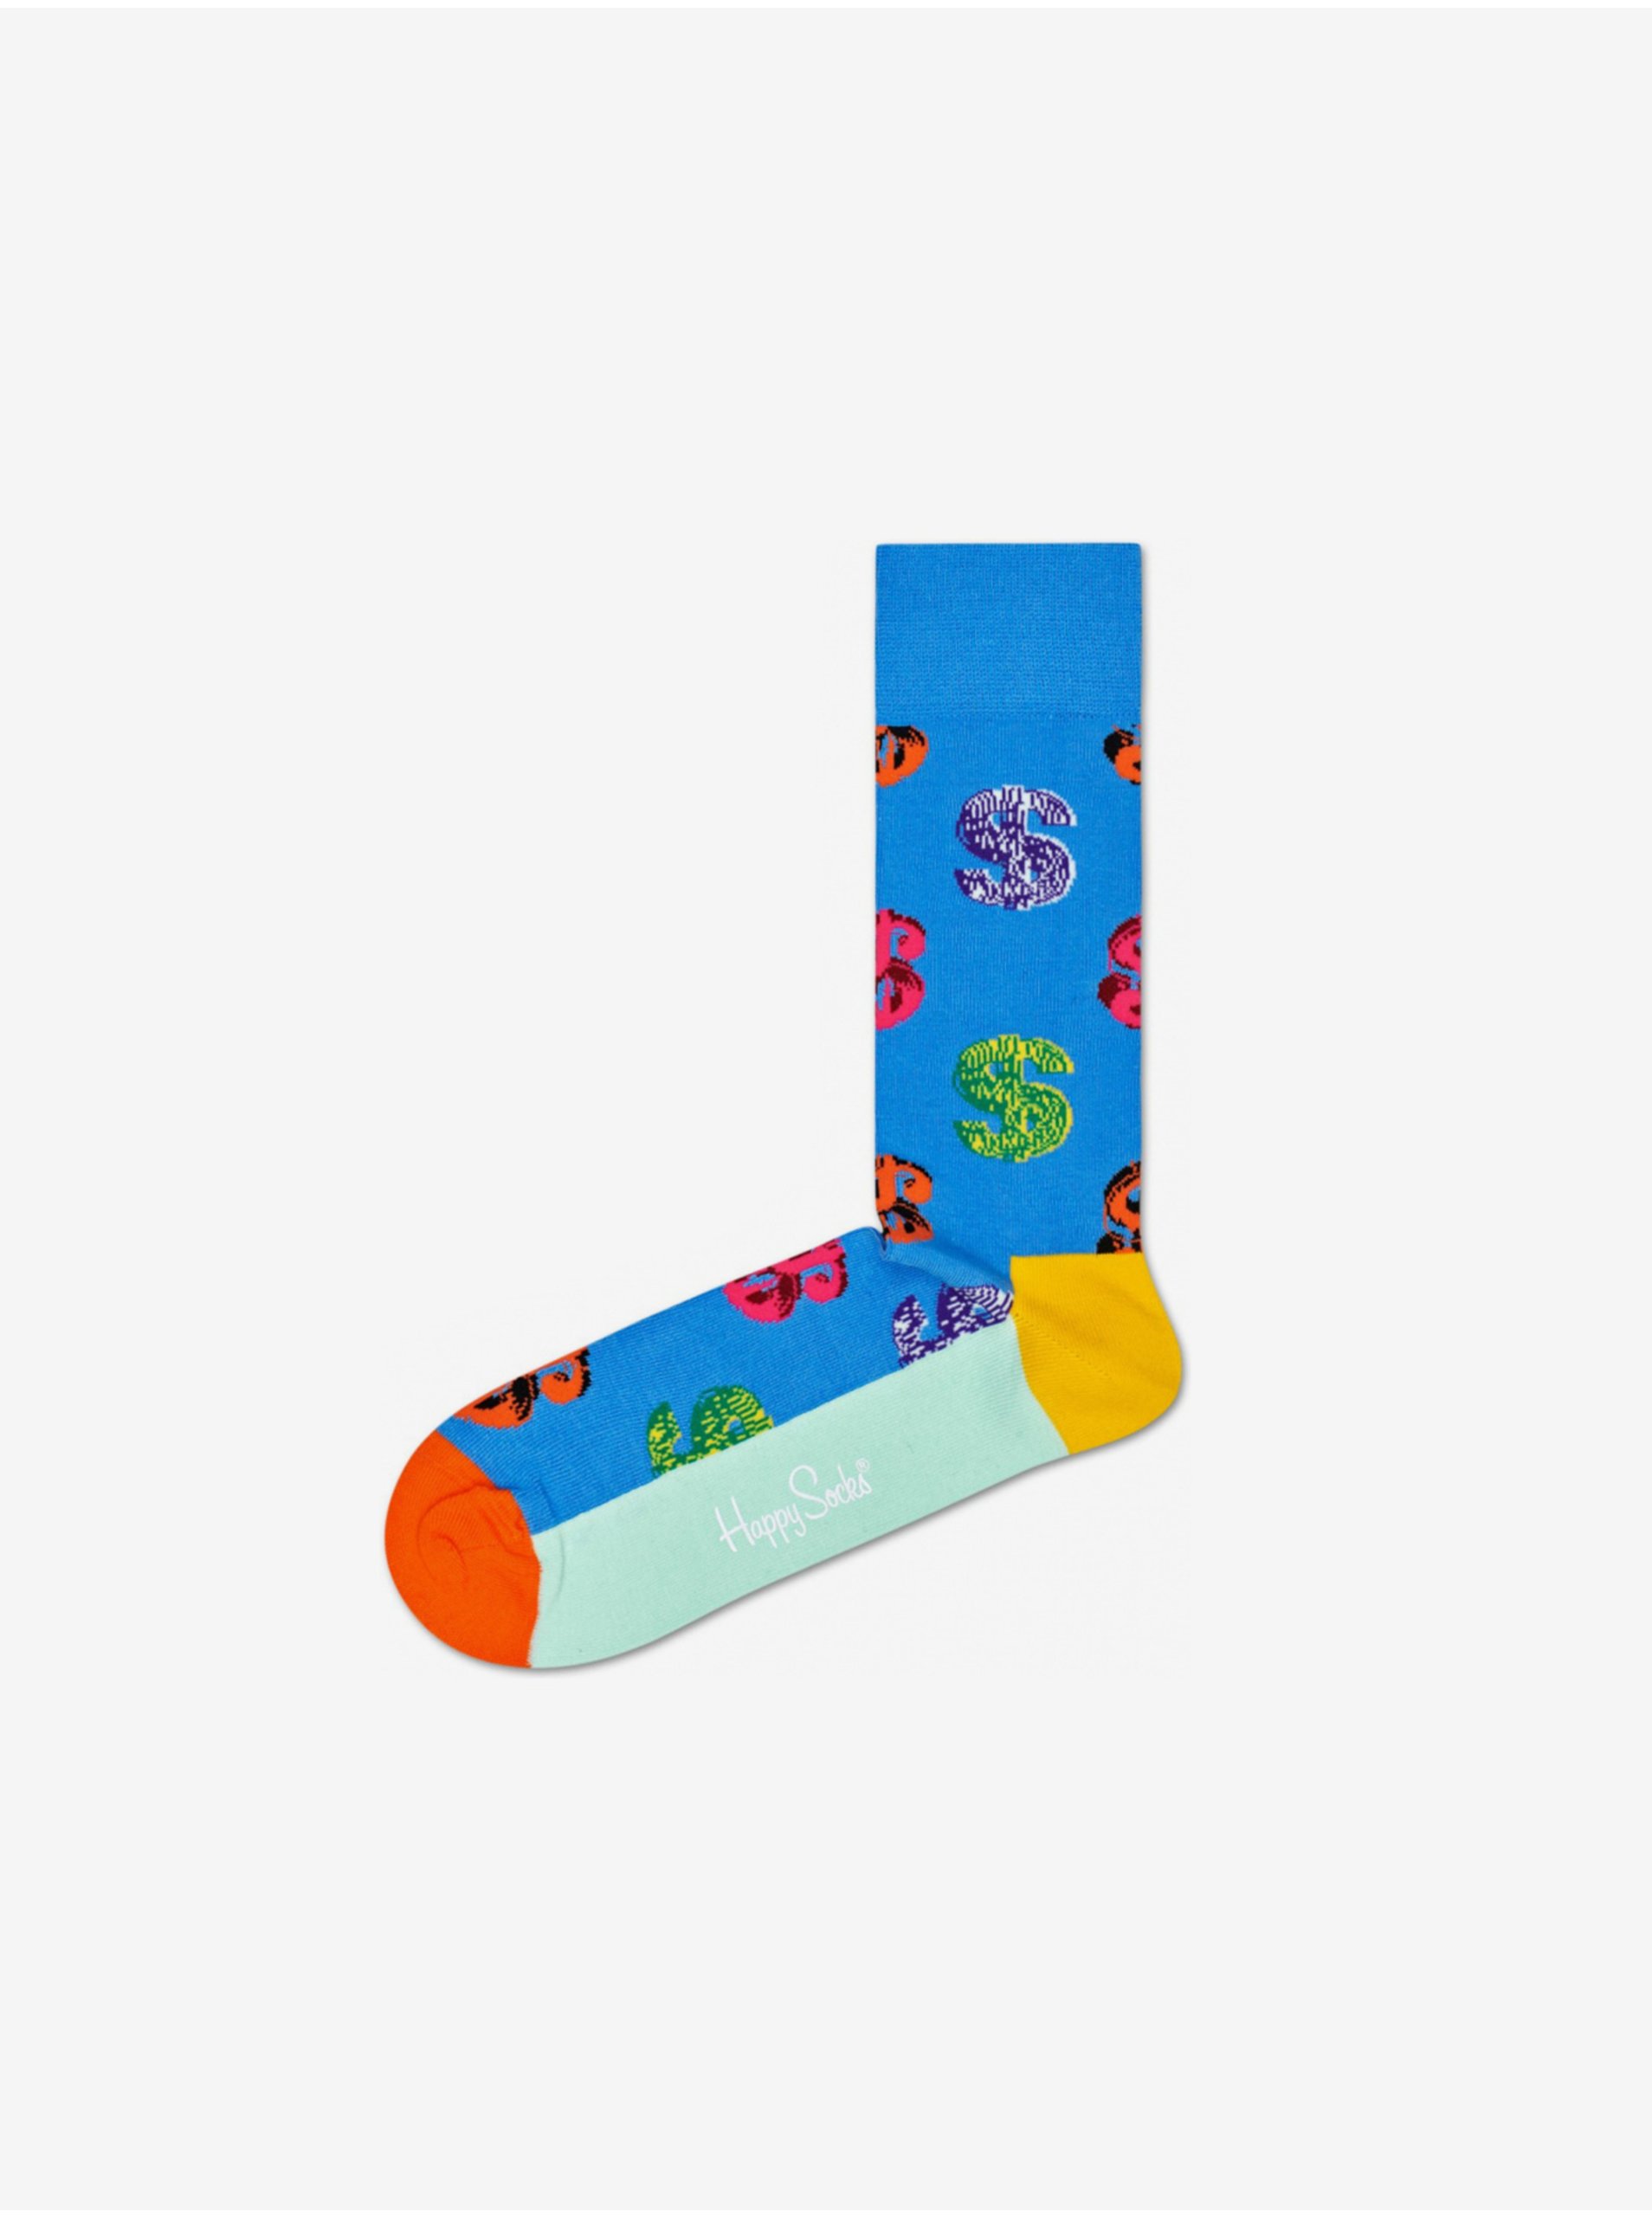 Andy Warhol Dollar Socks Happy Socks - Mens